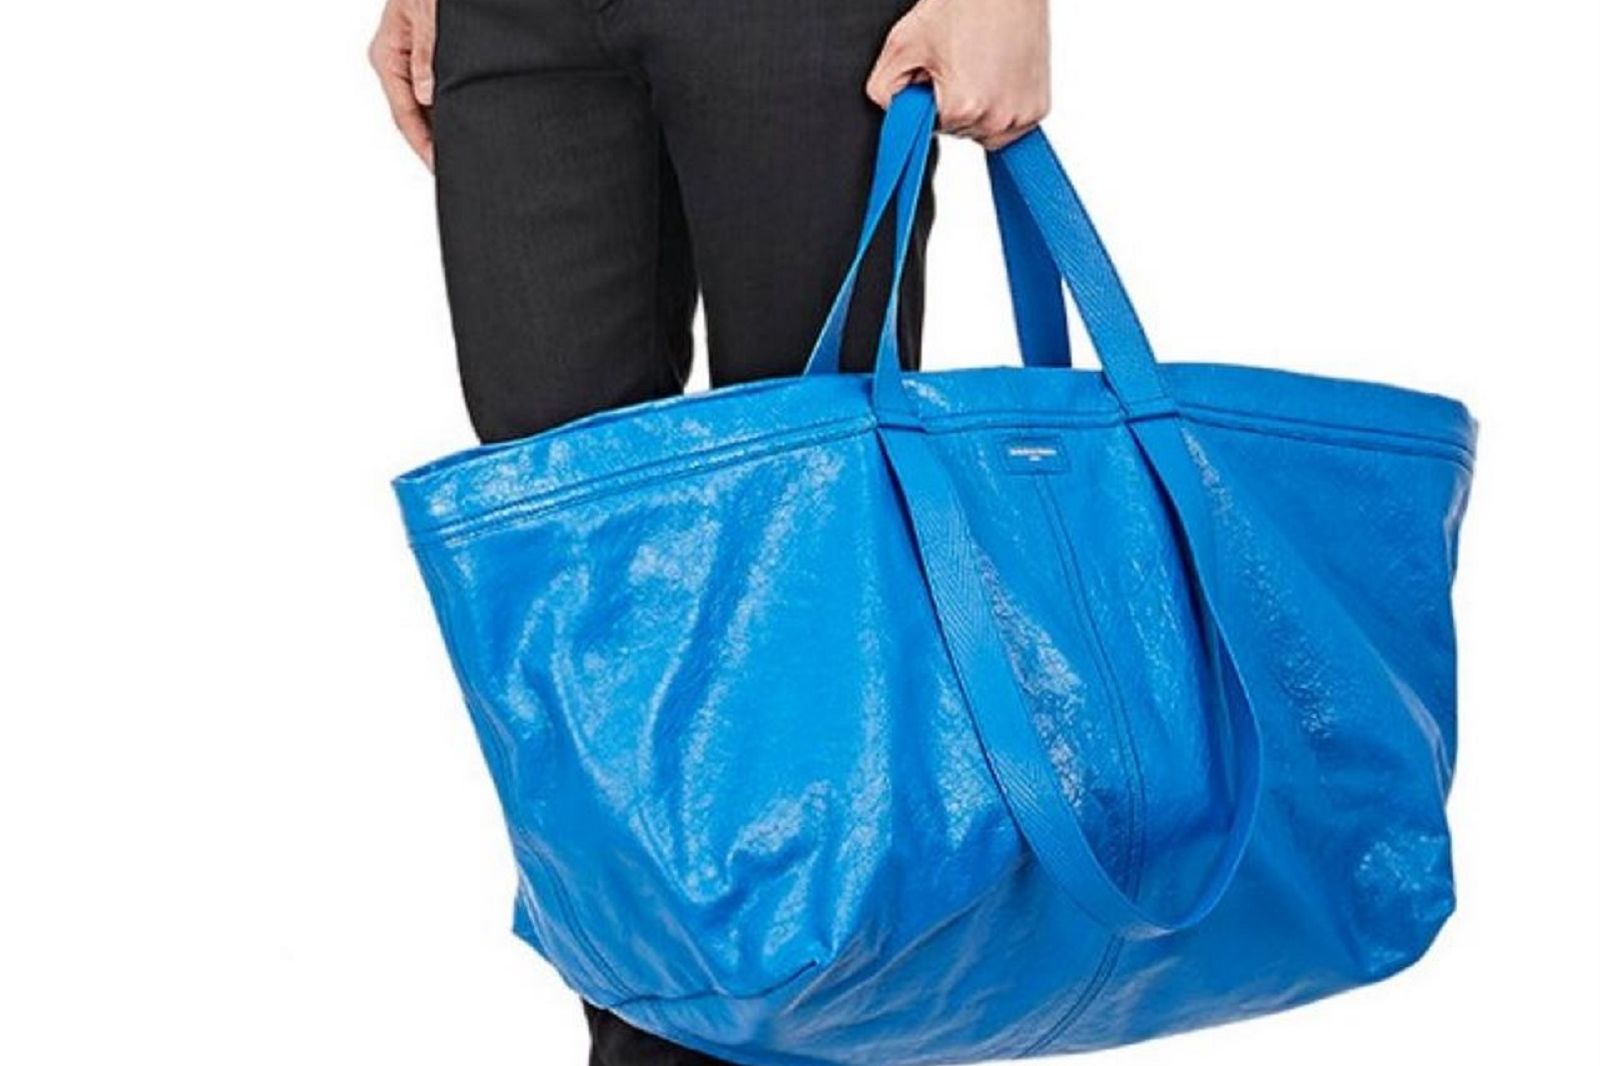 Balenciaga's $2,145 bag is like Ikea's 99 cent tote |